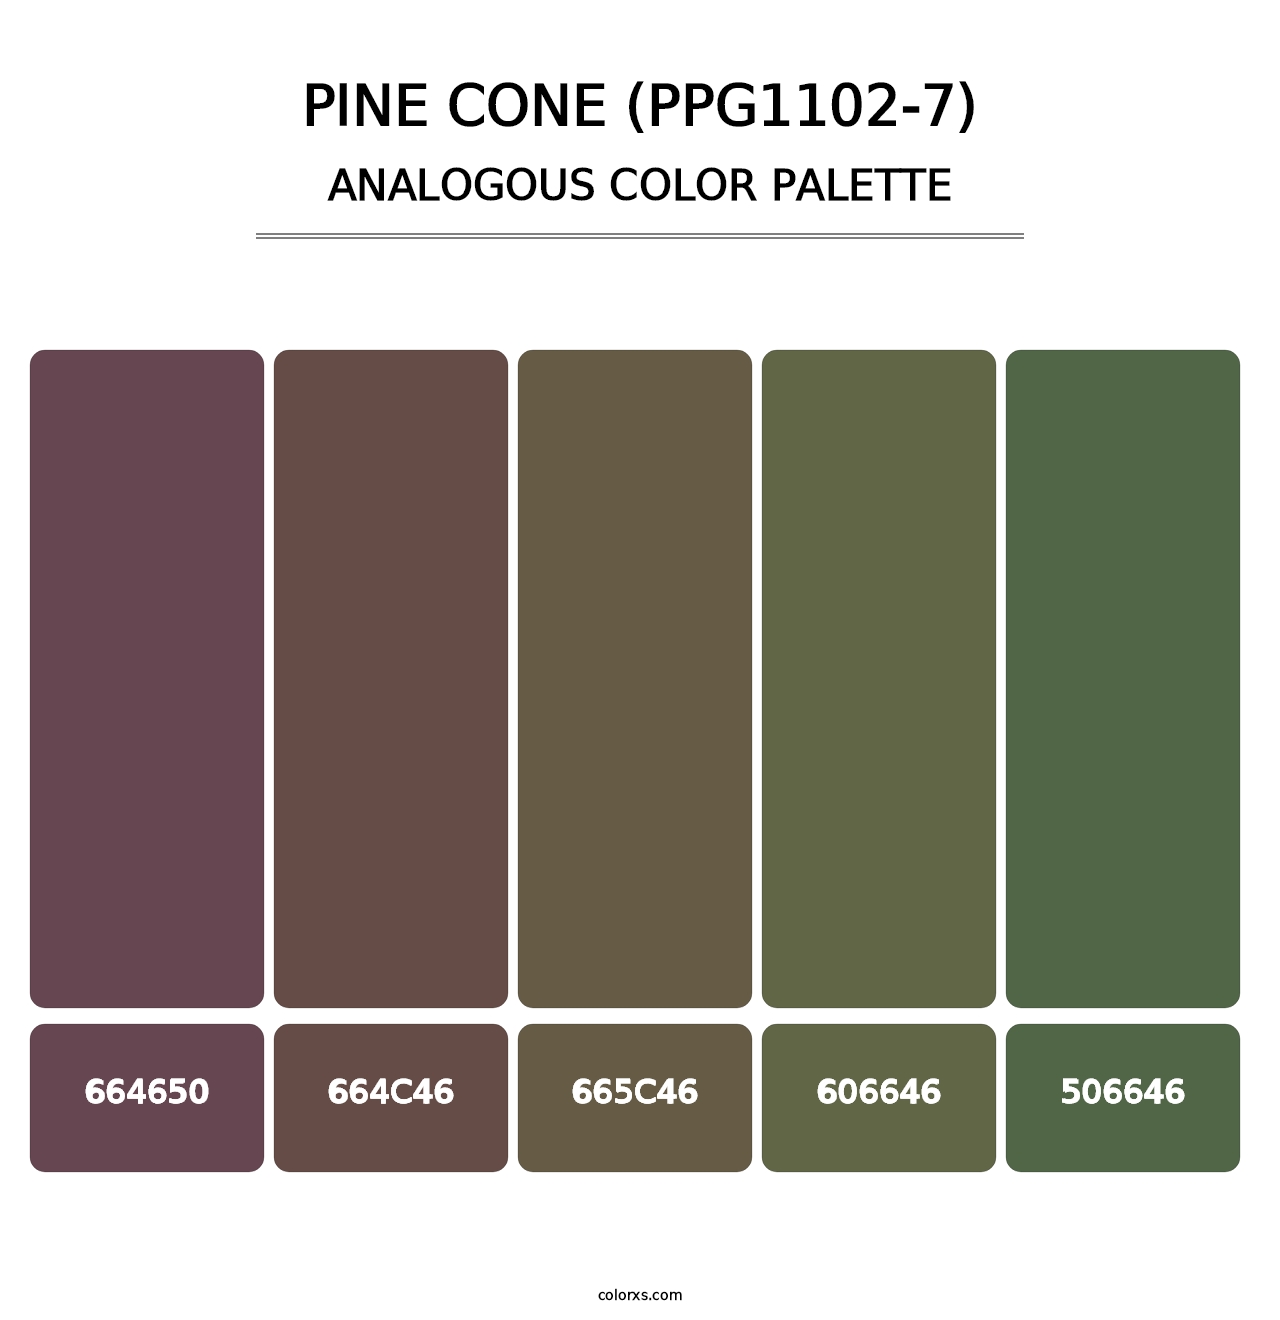 Pine Cone (PPG1102-7) - Analogous Color Palette